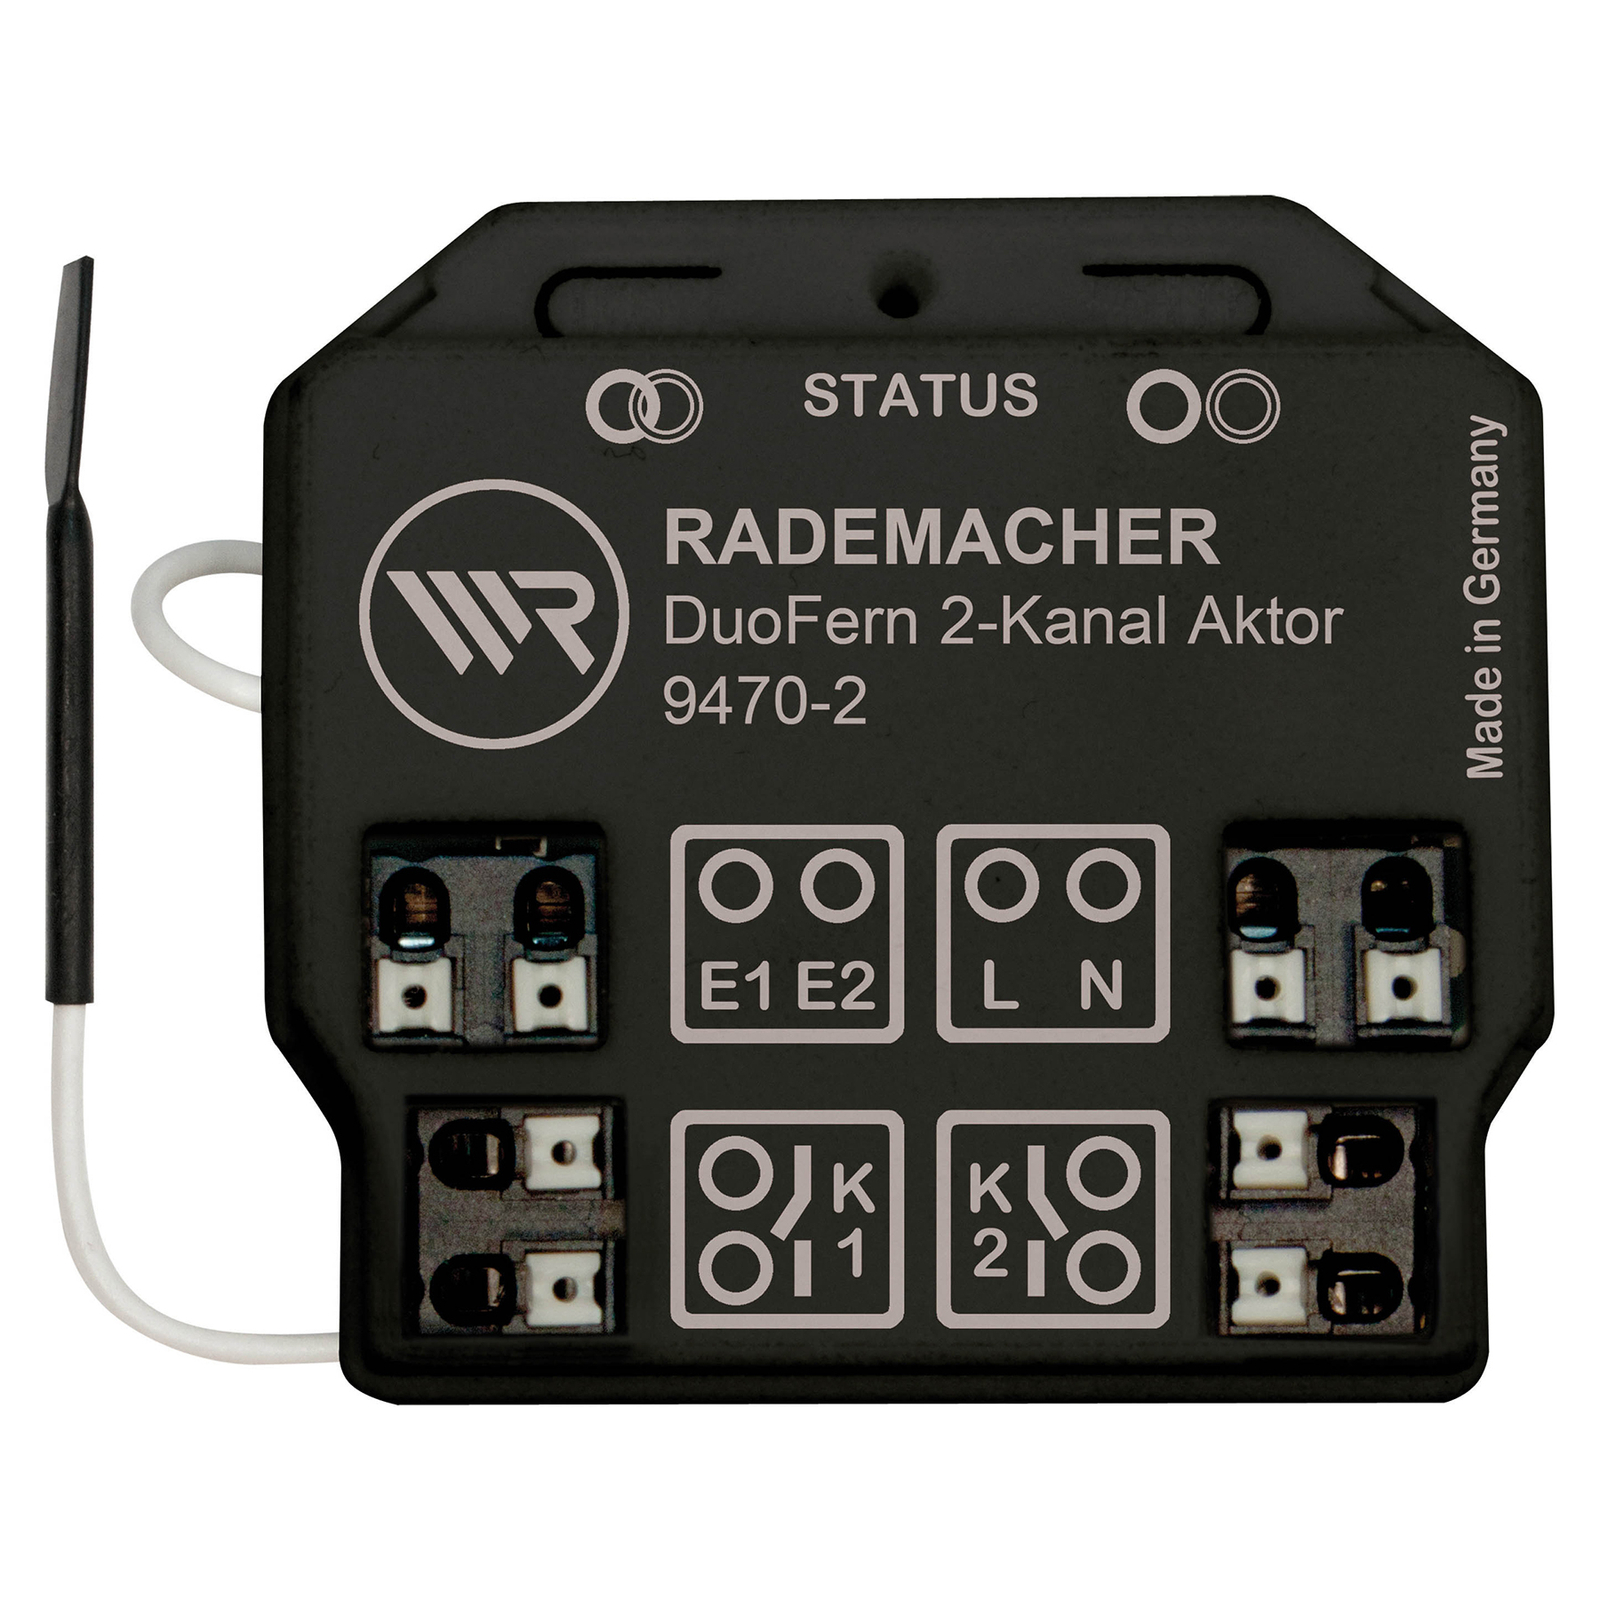 Rademacher DuoFern universalaktuator 2 x 1500 W